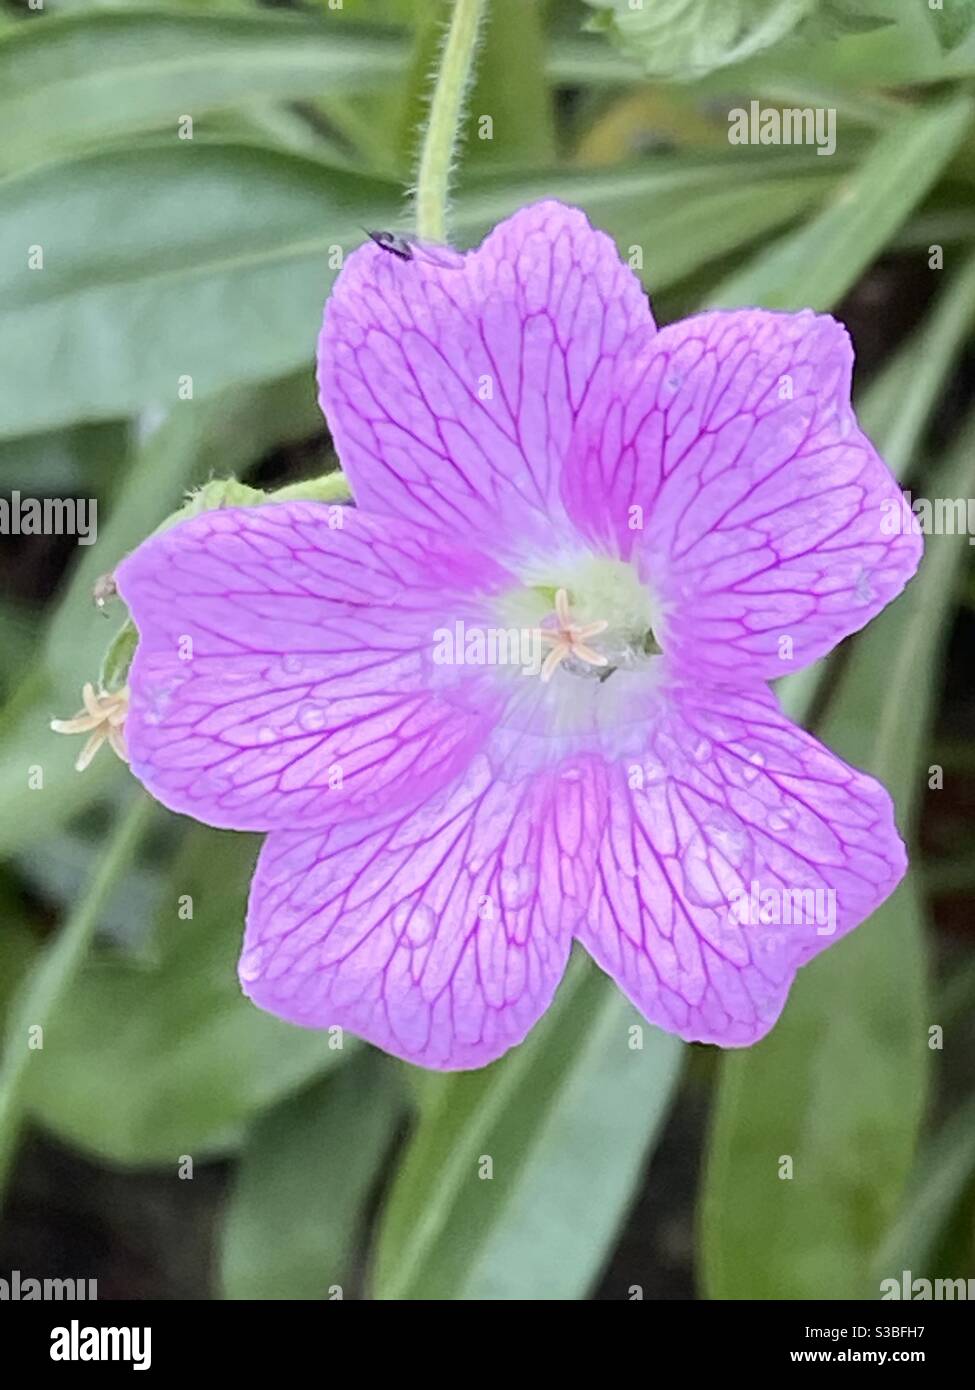 Flor silvestre verde fotografías e imágenes de alta resolución - Alamy